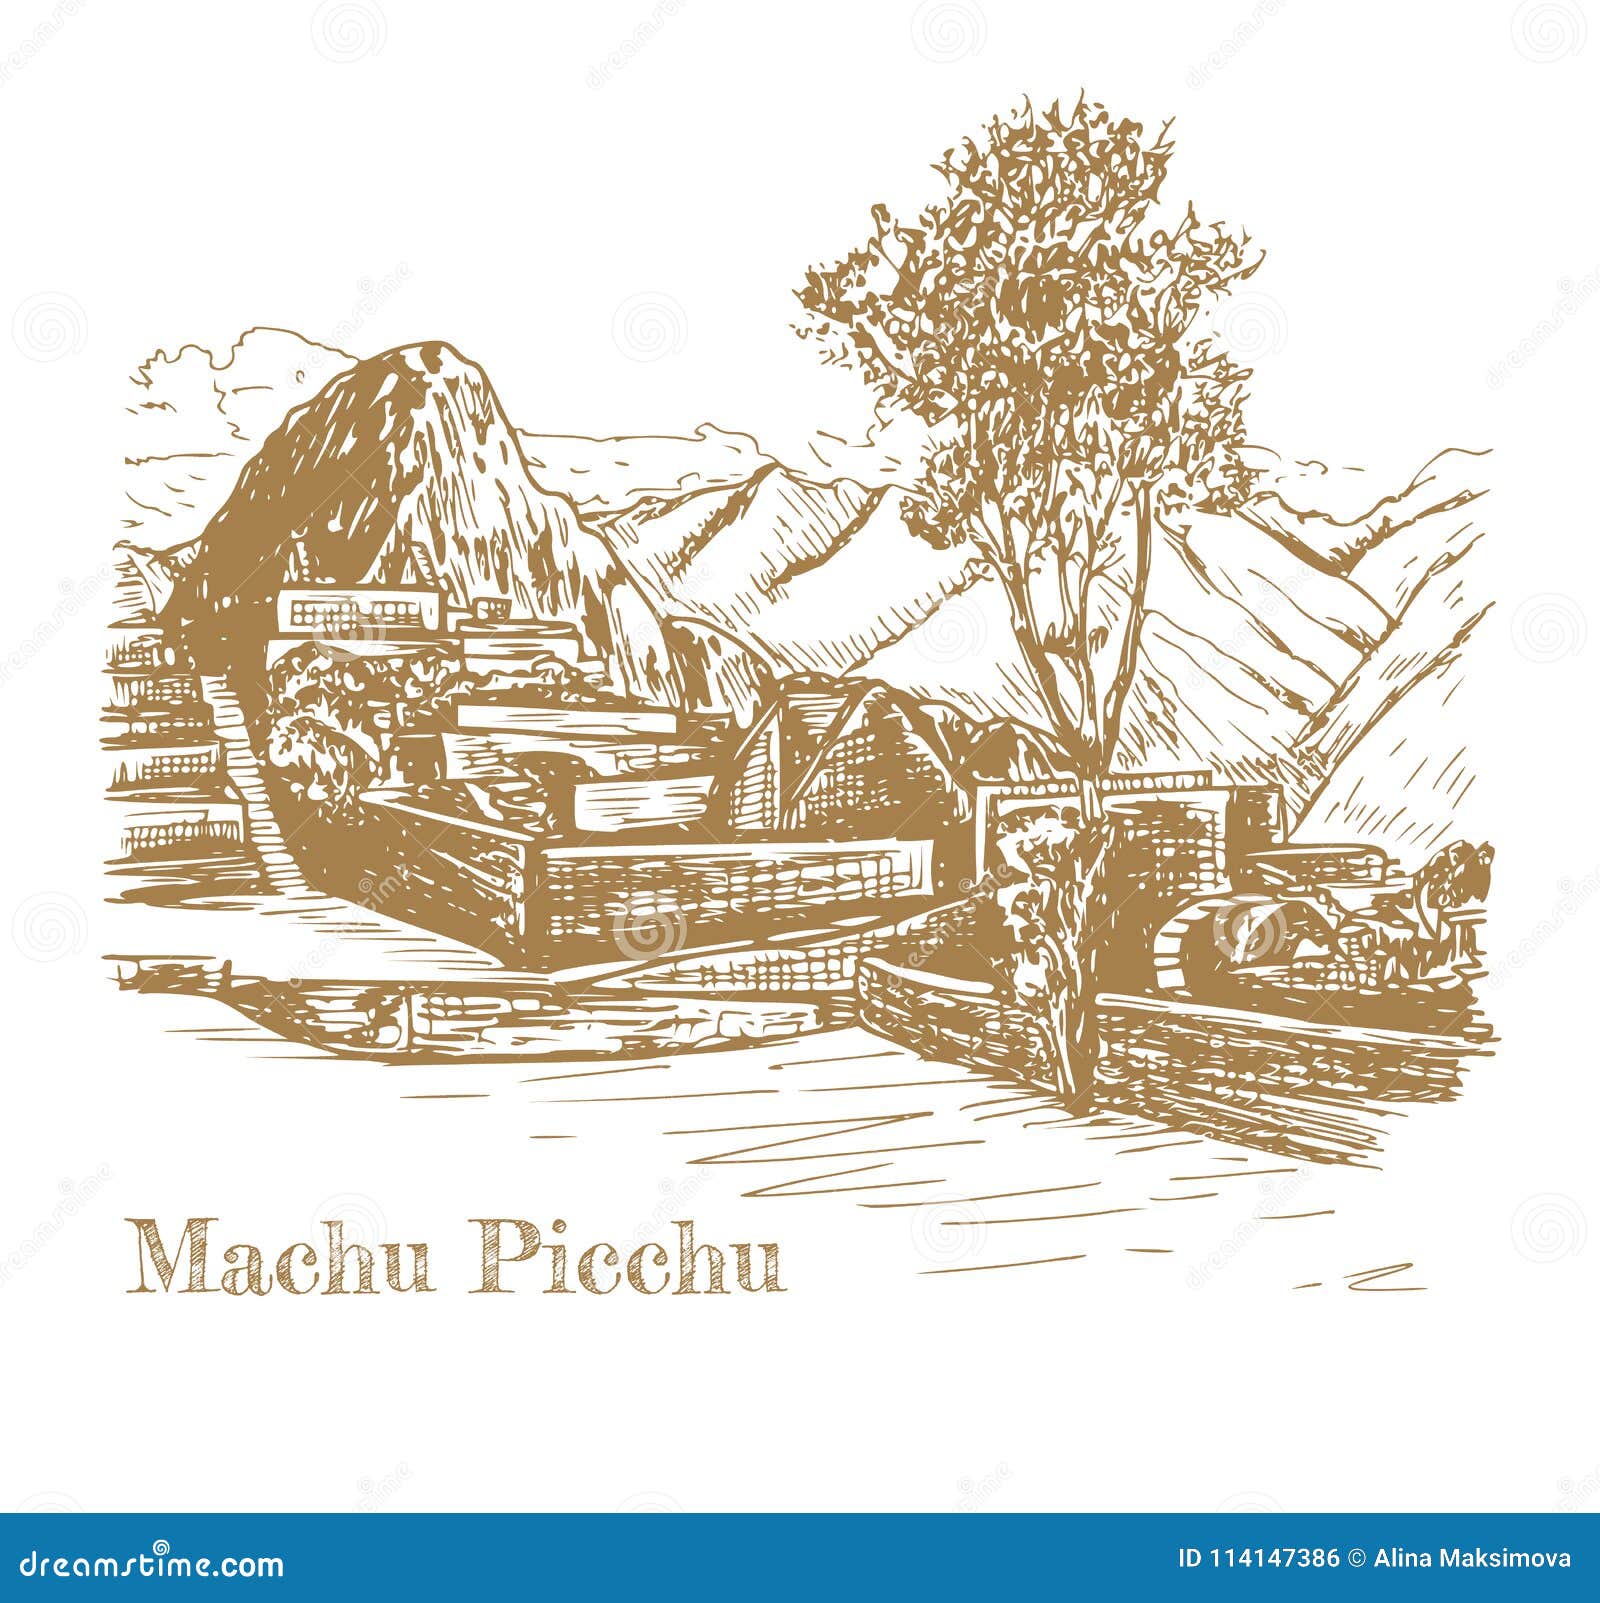 398 Machu Picchu Sketch Images, Stock Photos & Vectors | Shutterstock